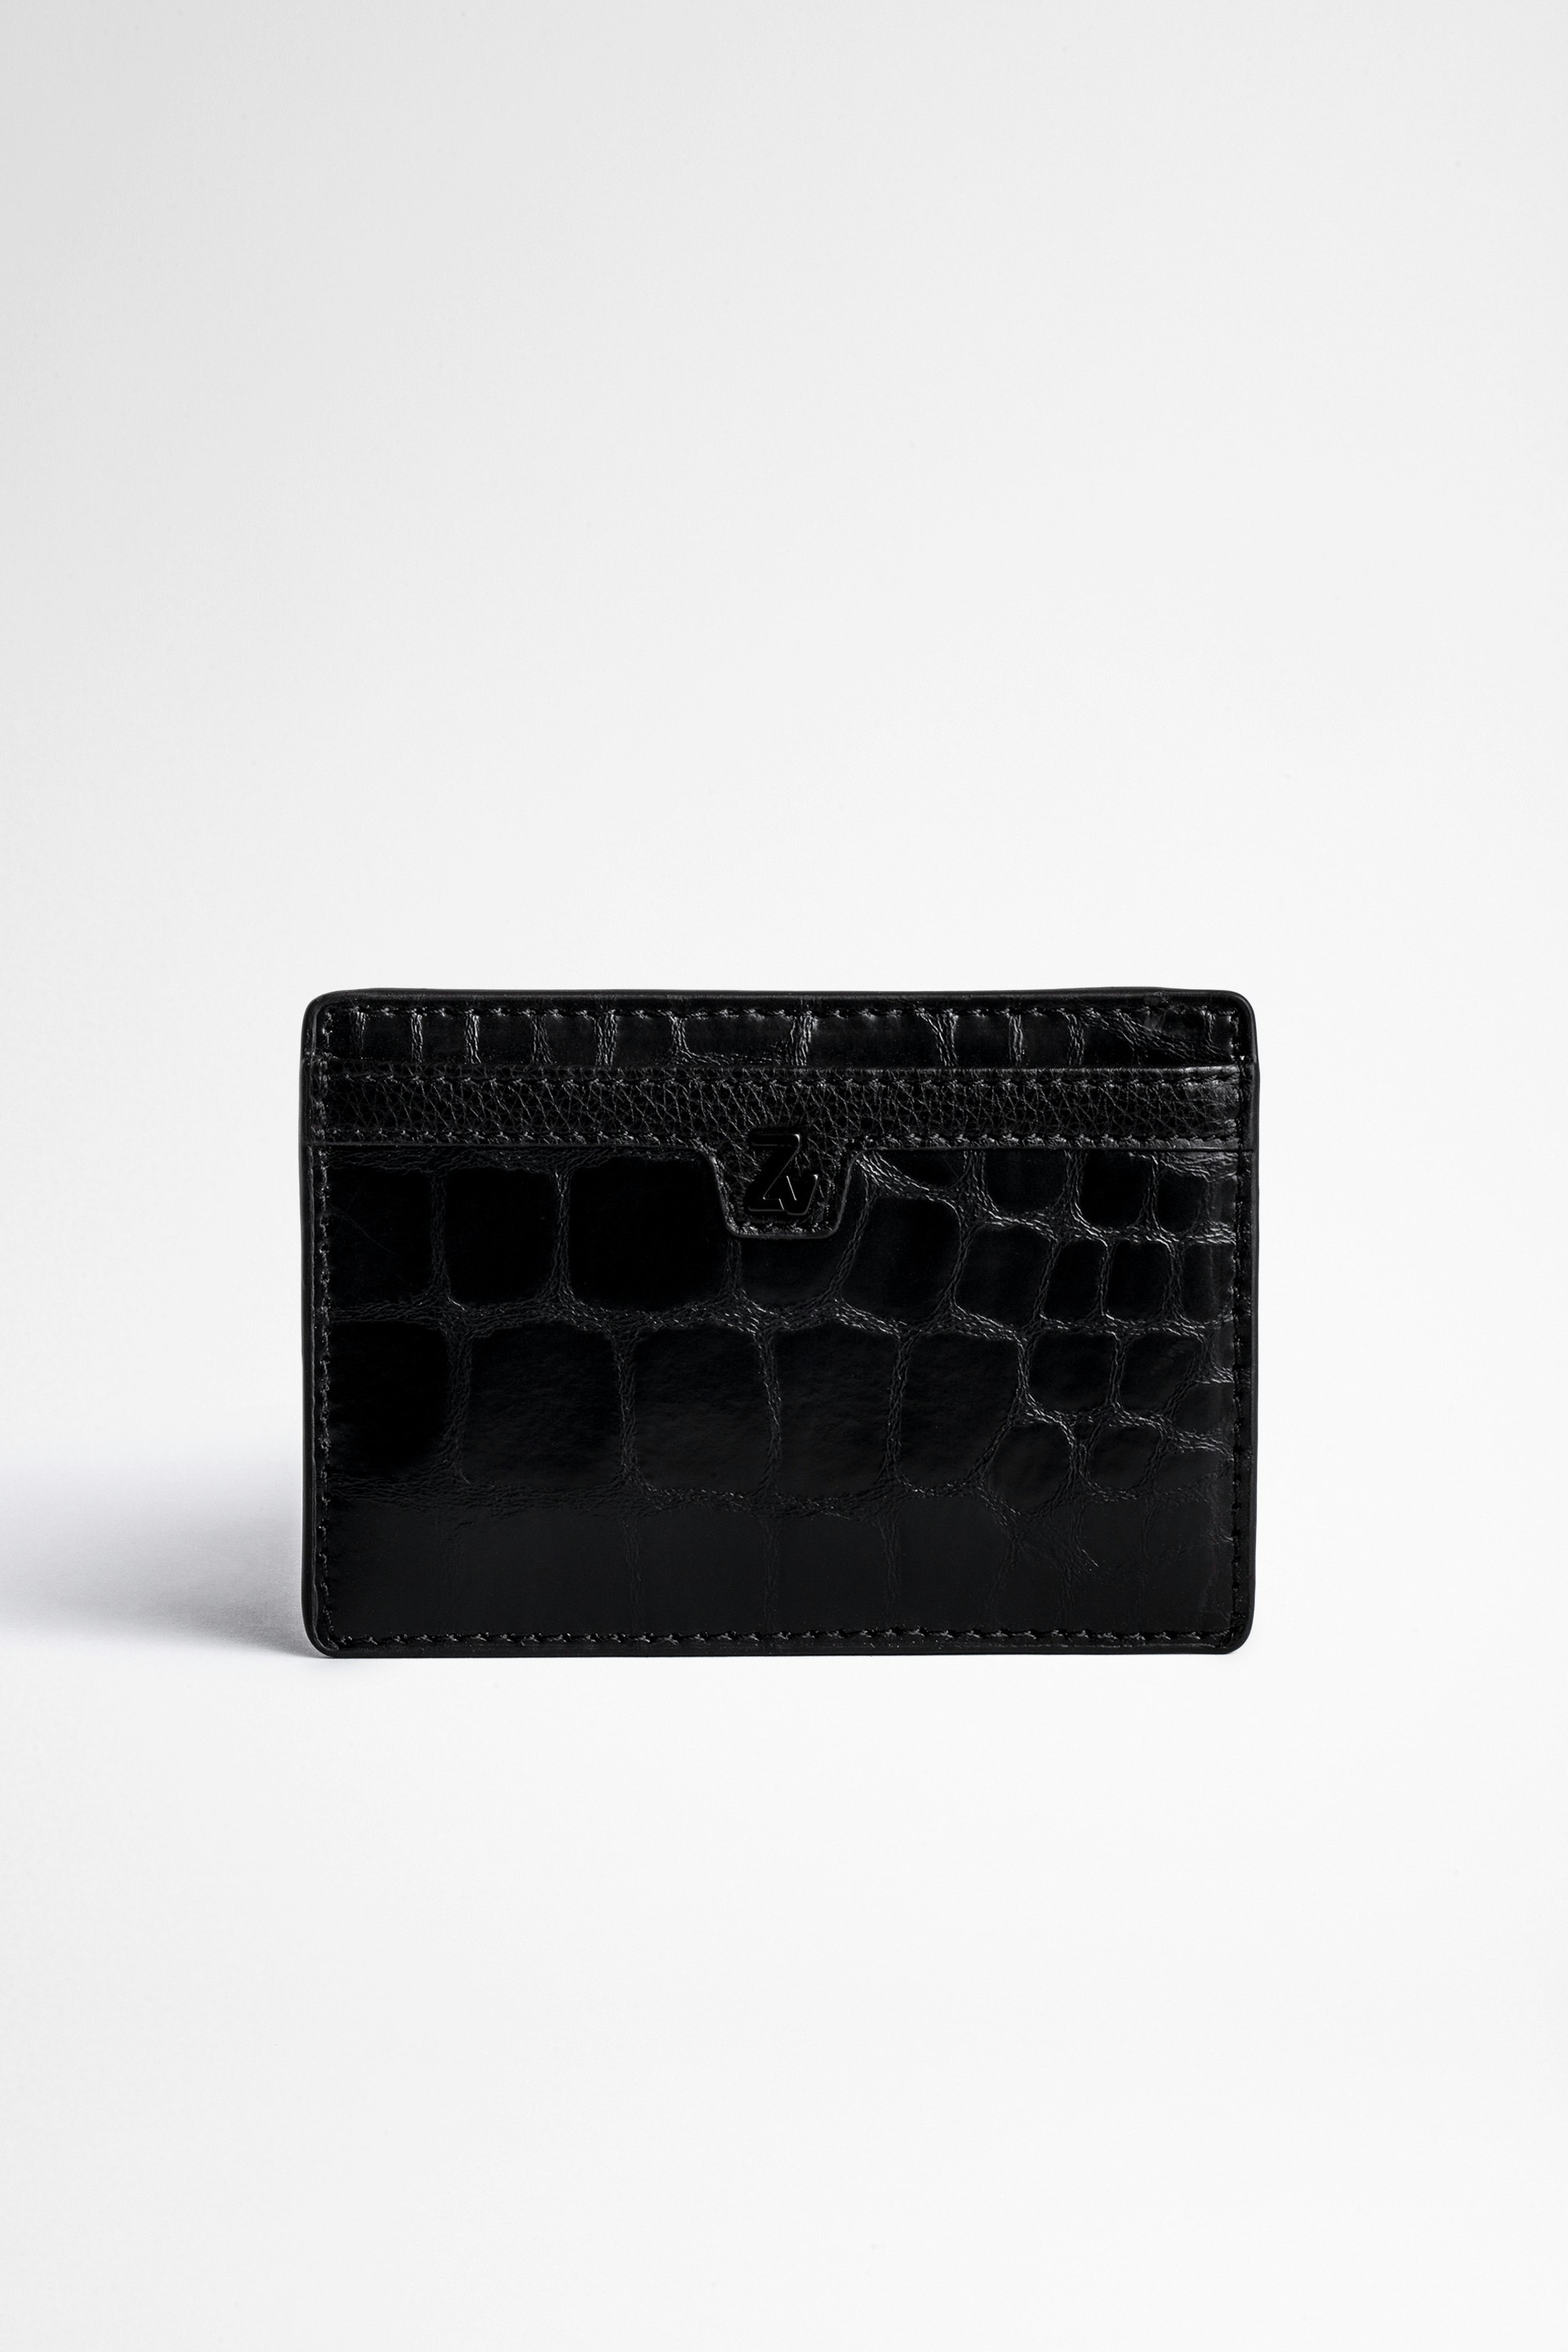 ZV Initiale Noam レザー財布  Men's black embossed leather card holder